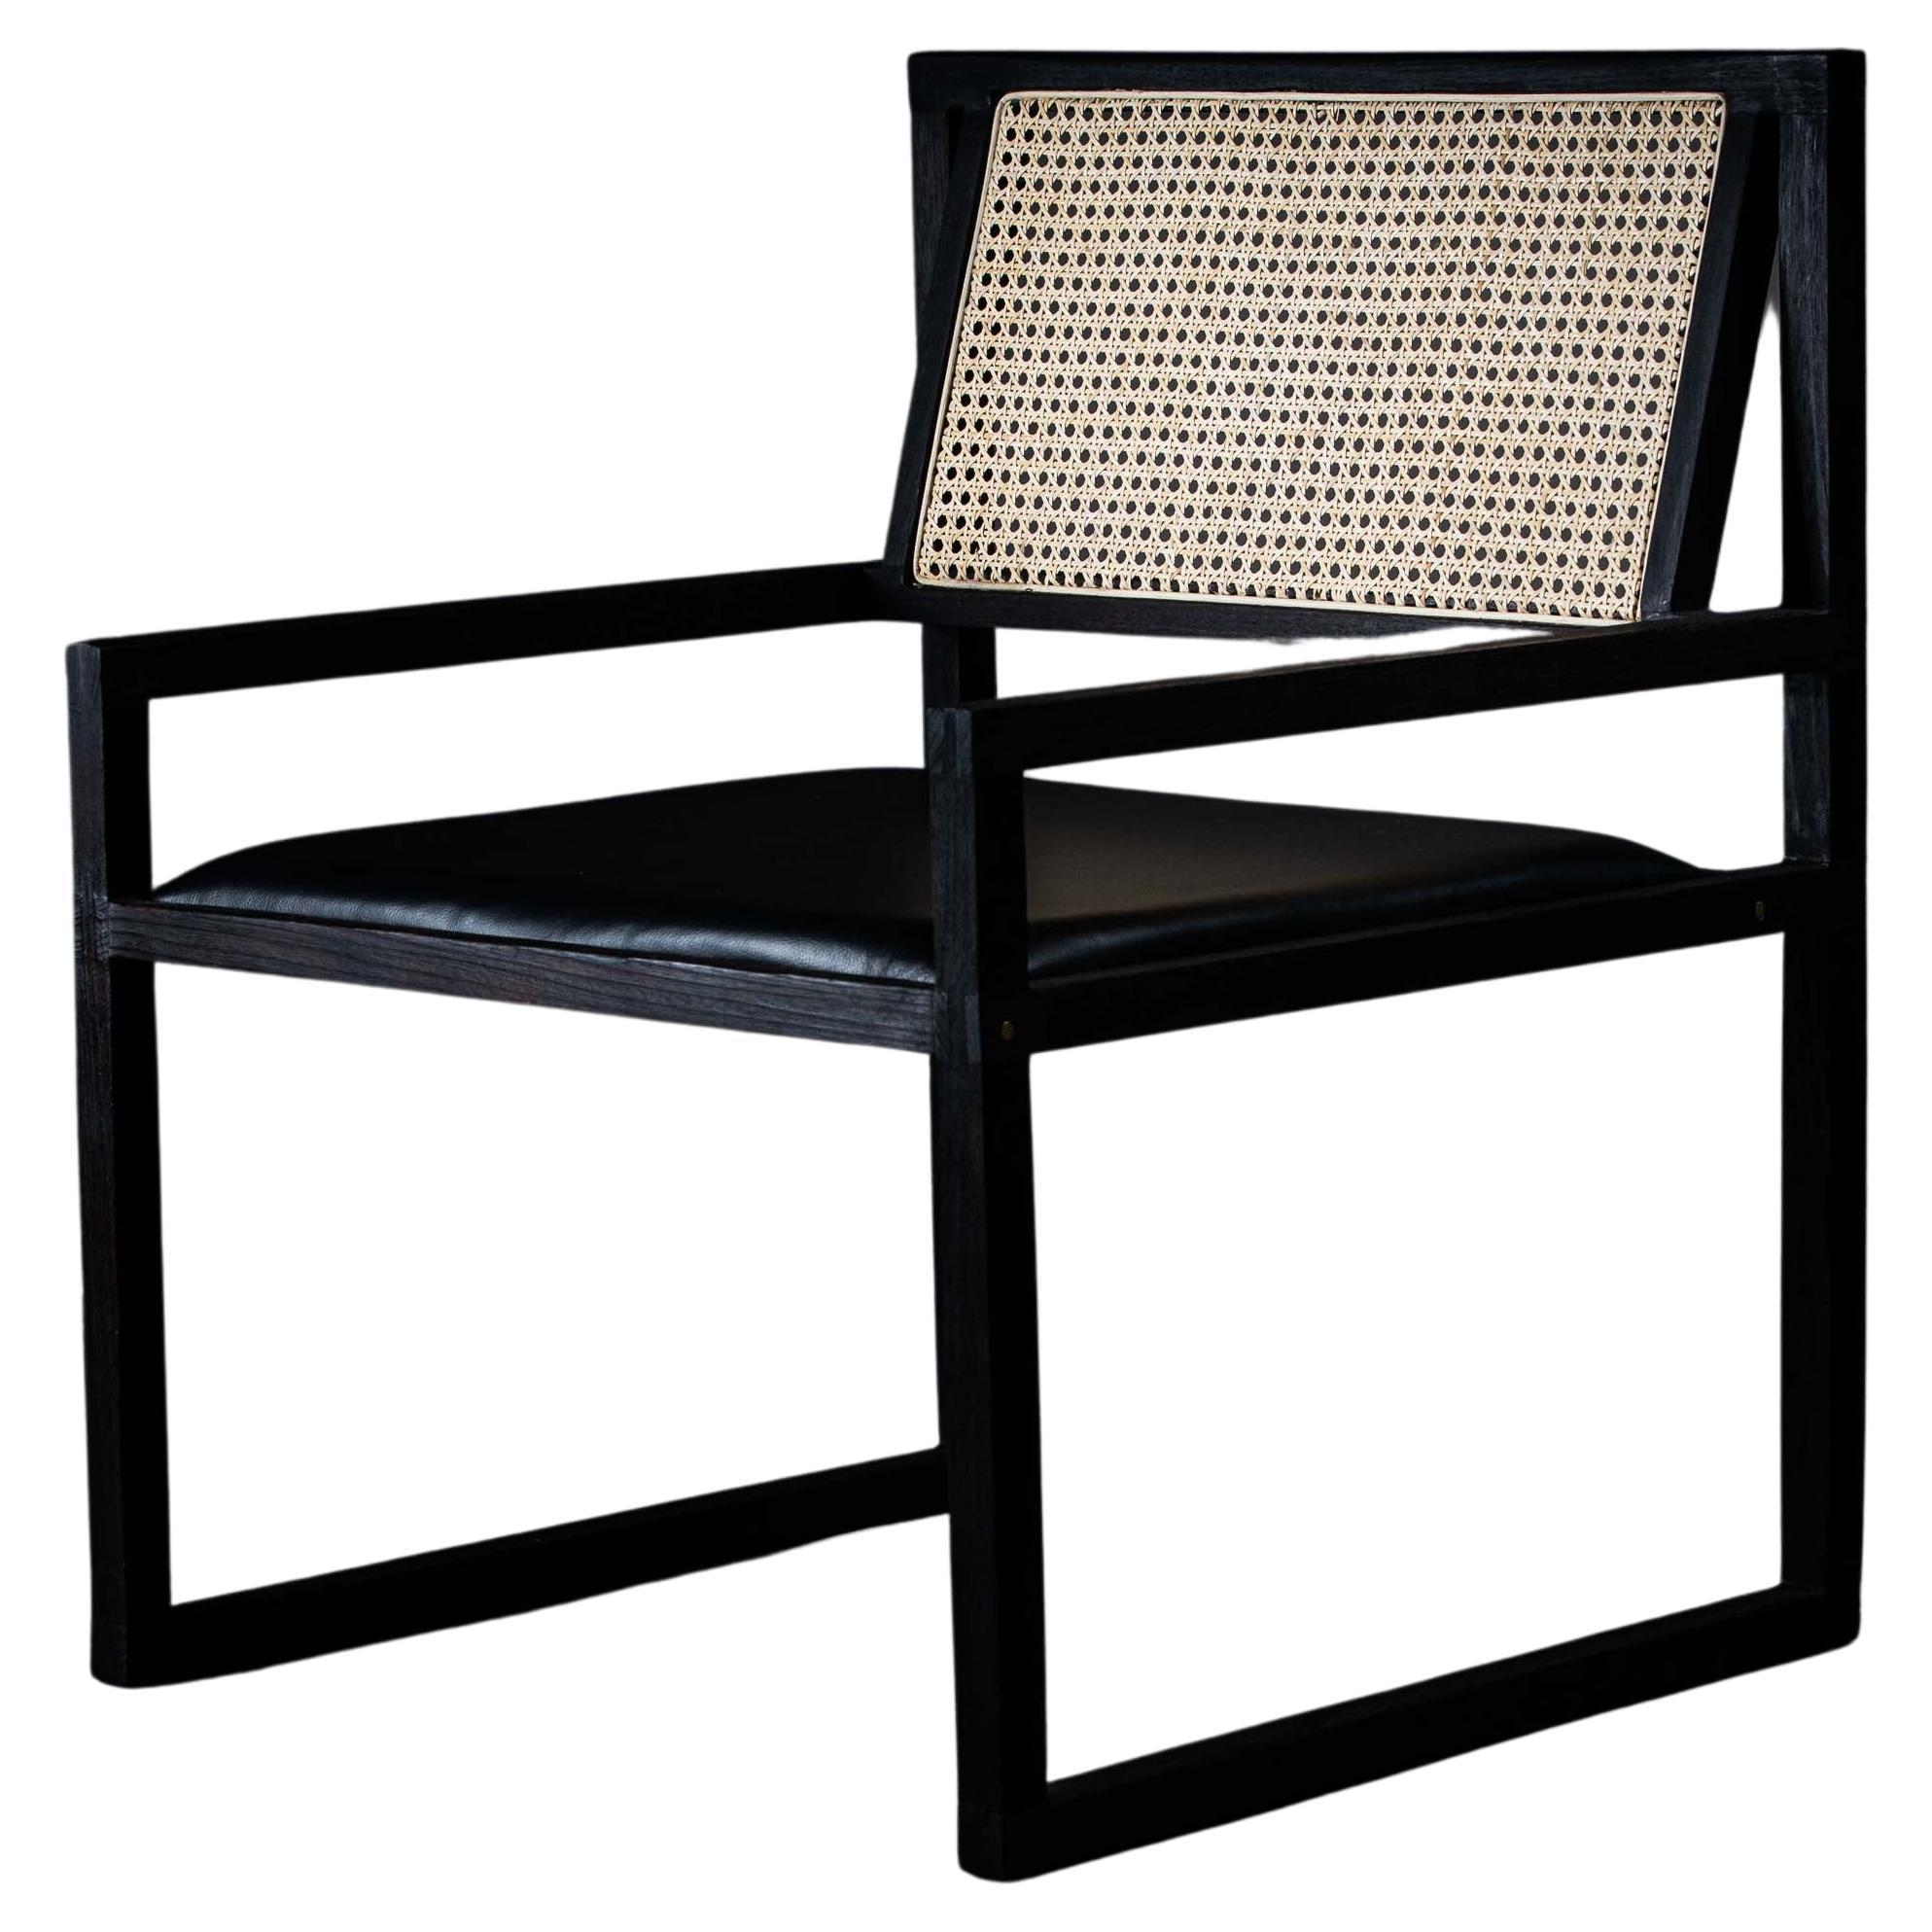 Quadratischer Sessel, Carbonisierte Oberfläche mit Shou Sugi Ban, japanische Technik